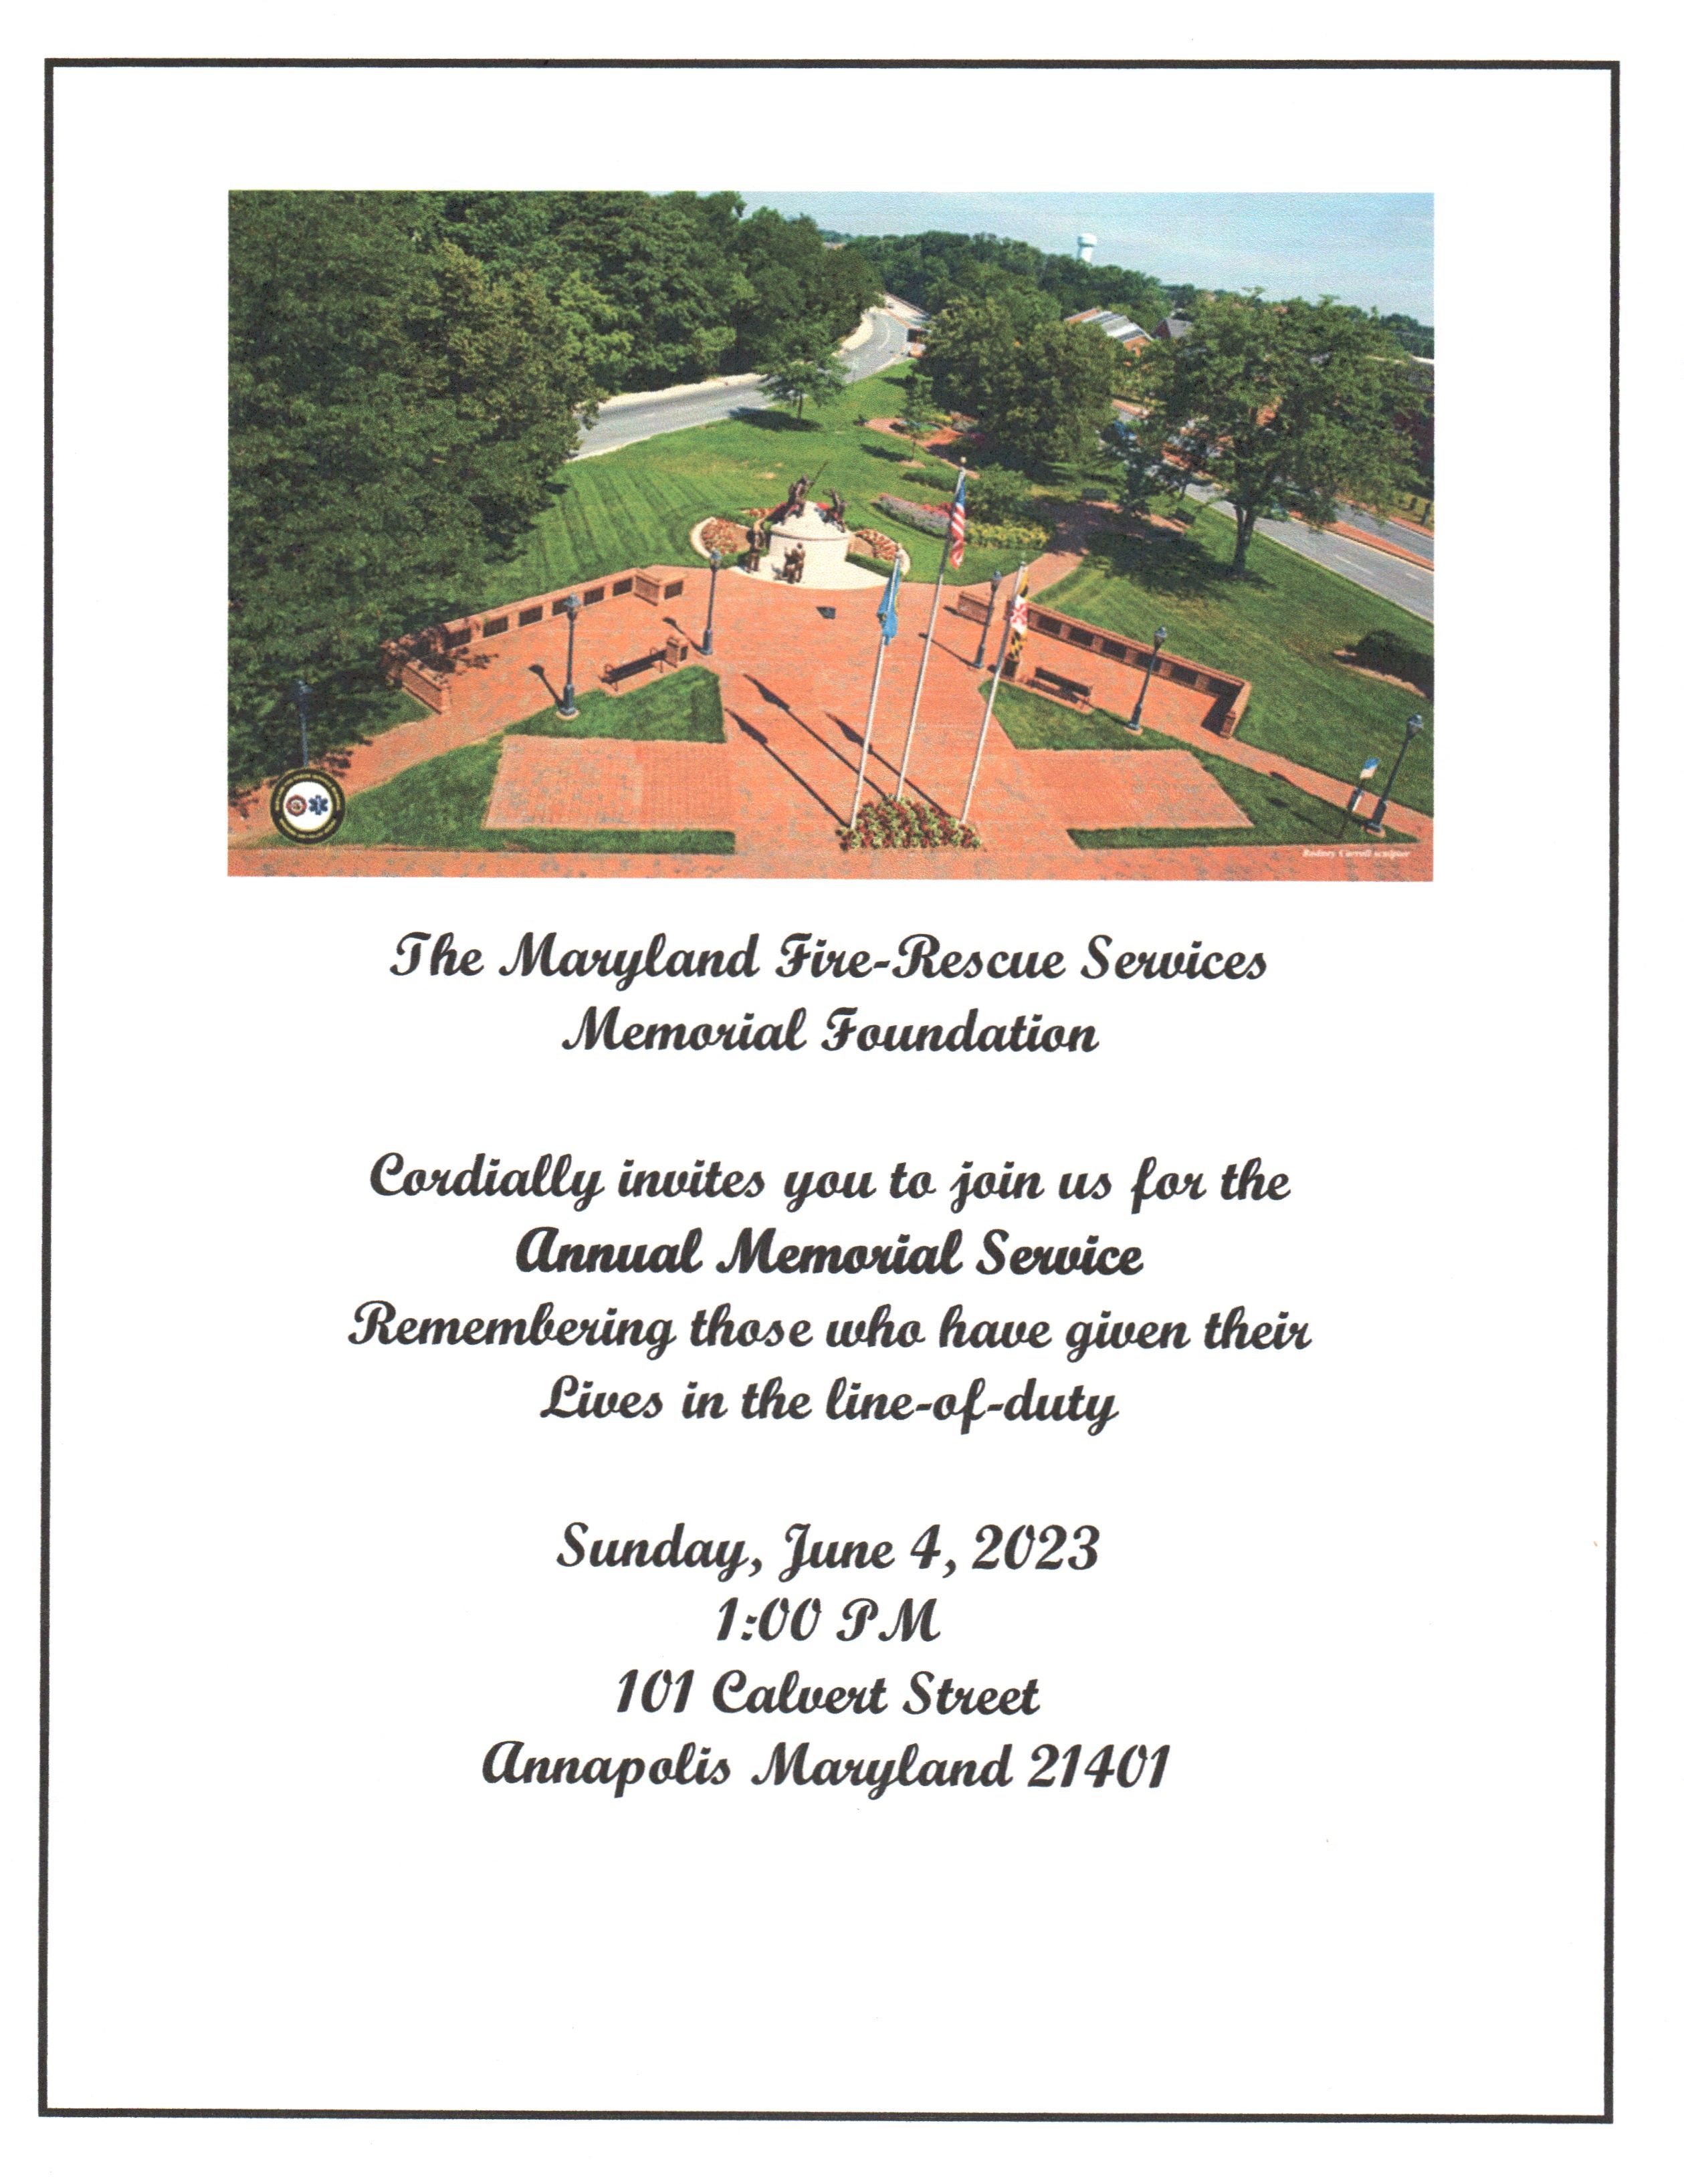 Memorial Foundation Annual Memorial Service Flyer